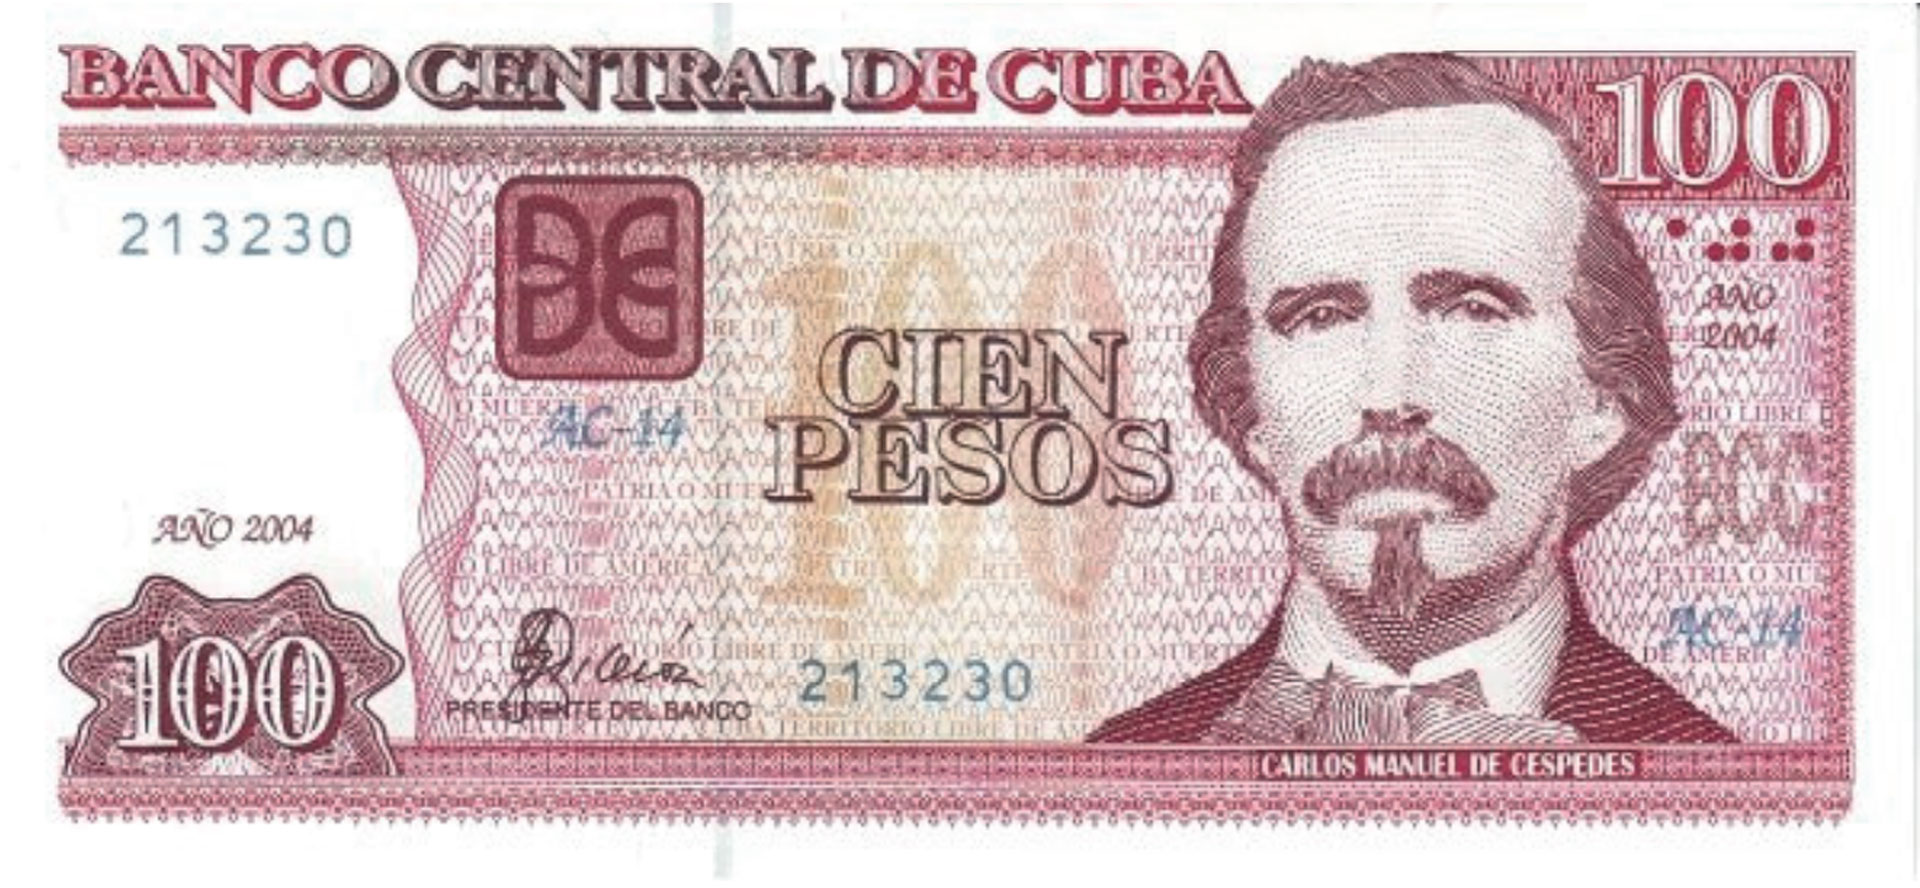 CUBA
Peso Cubano: $100 = USD 4,17
USD1 = 23,99